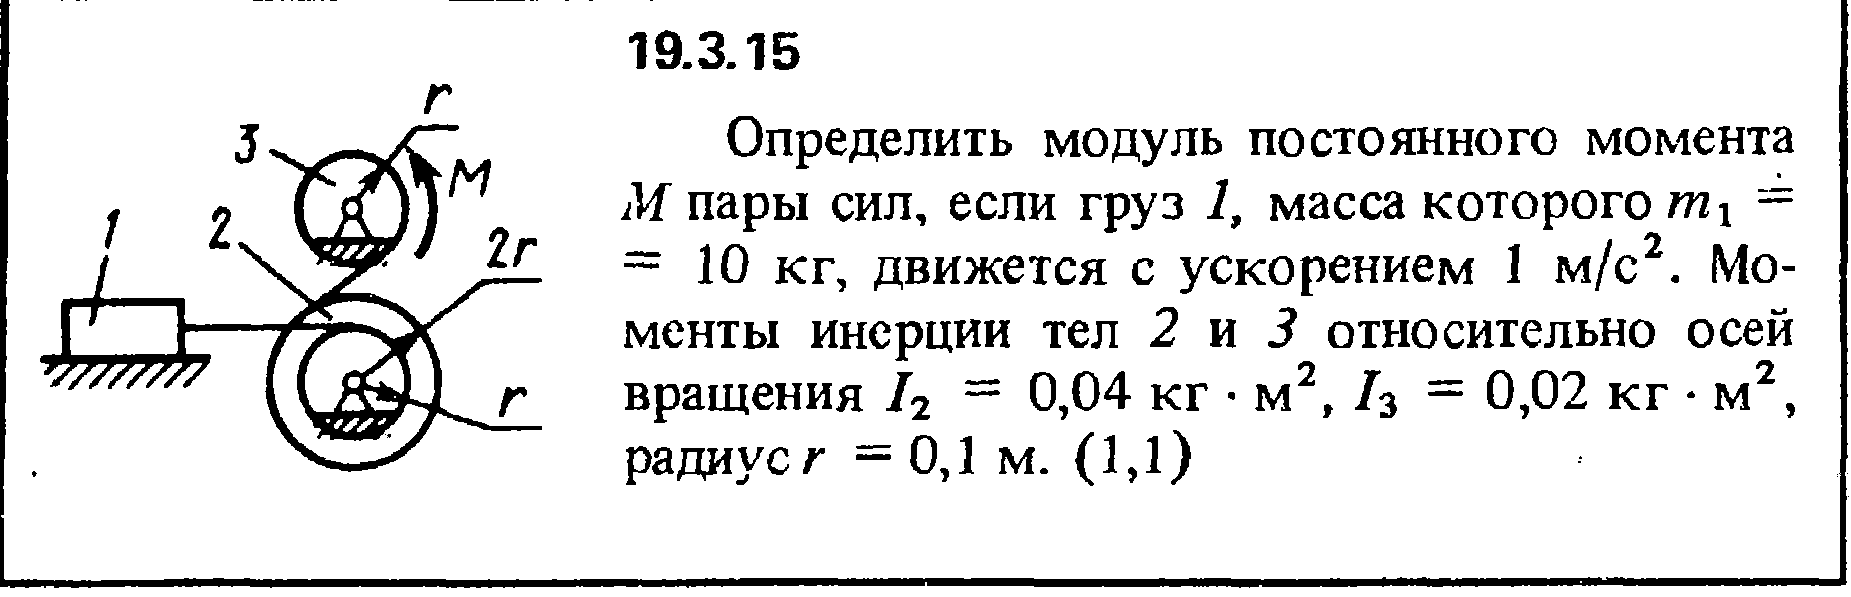 Решение 19.3.15 из сборника (решебника) Кепе О.Е. 1989